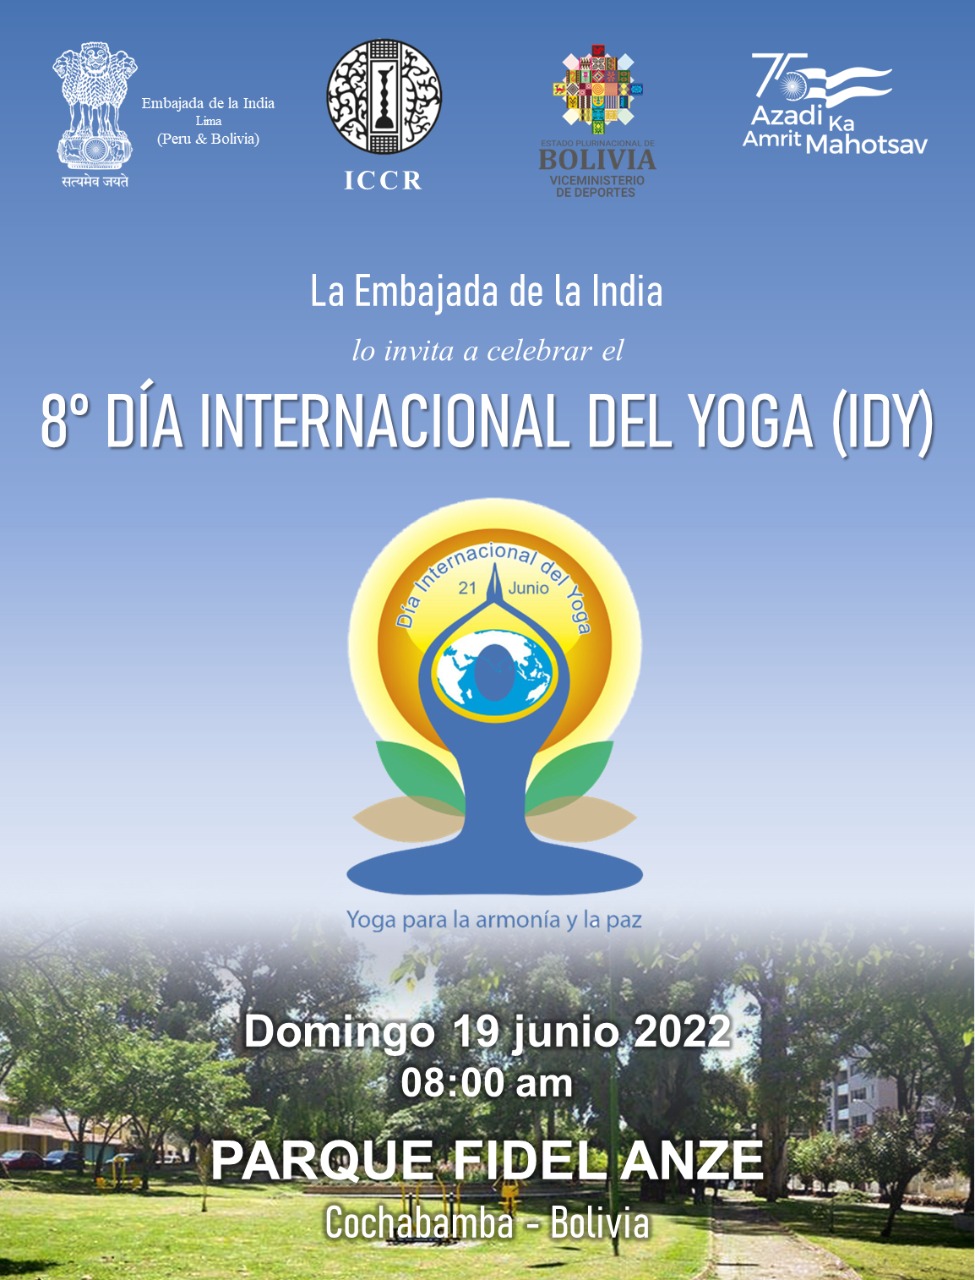 Celebration of 8th International Day of Yoga 2022 - Yoga event organised in Cochabamba, Bolivia